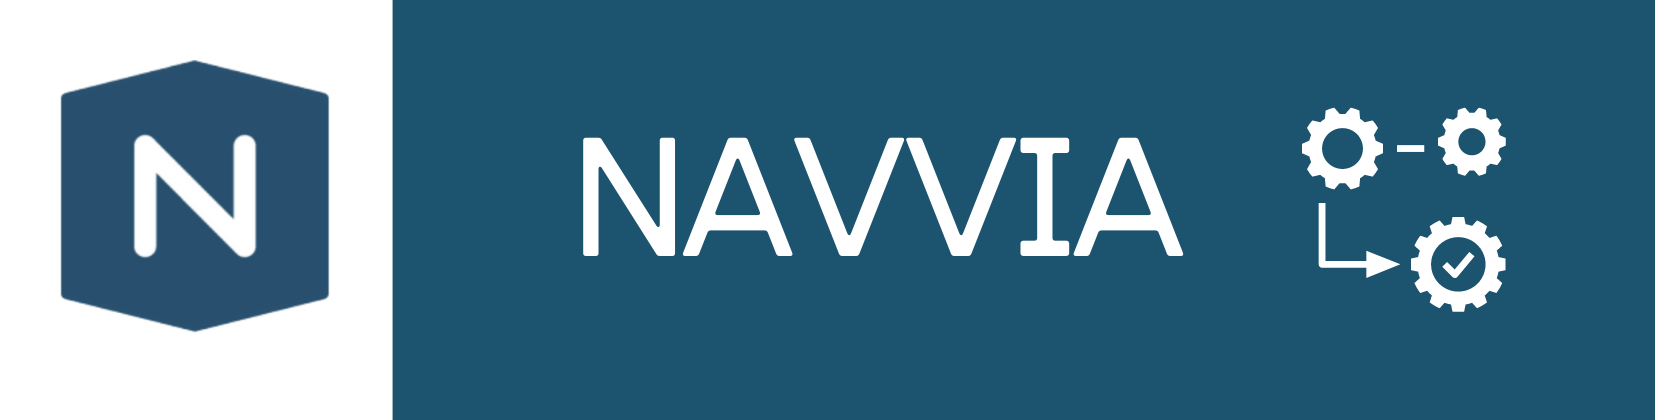 Navvia Software Banner